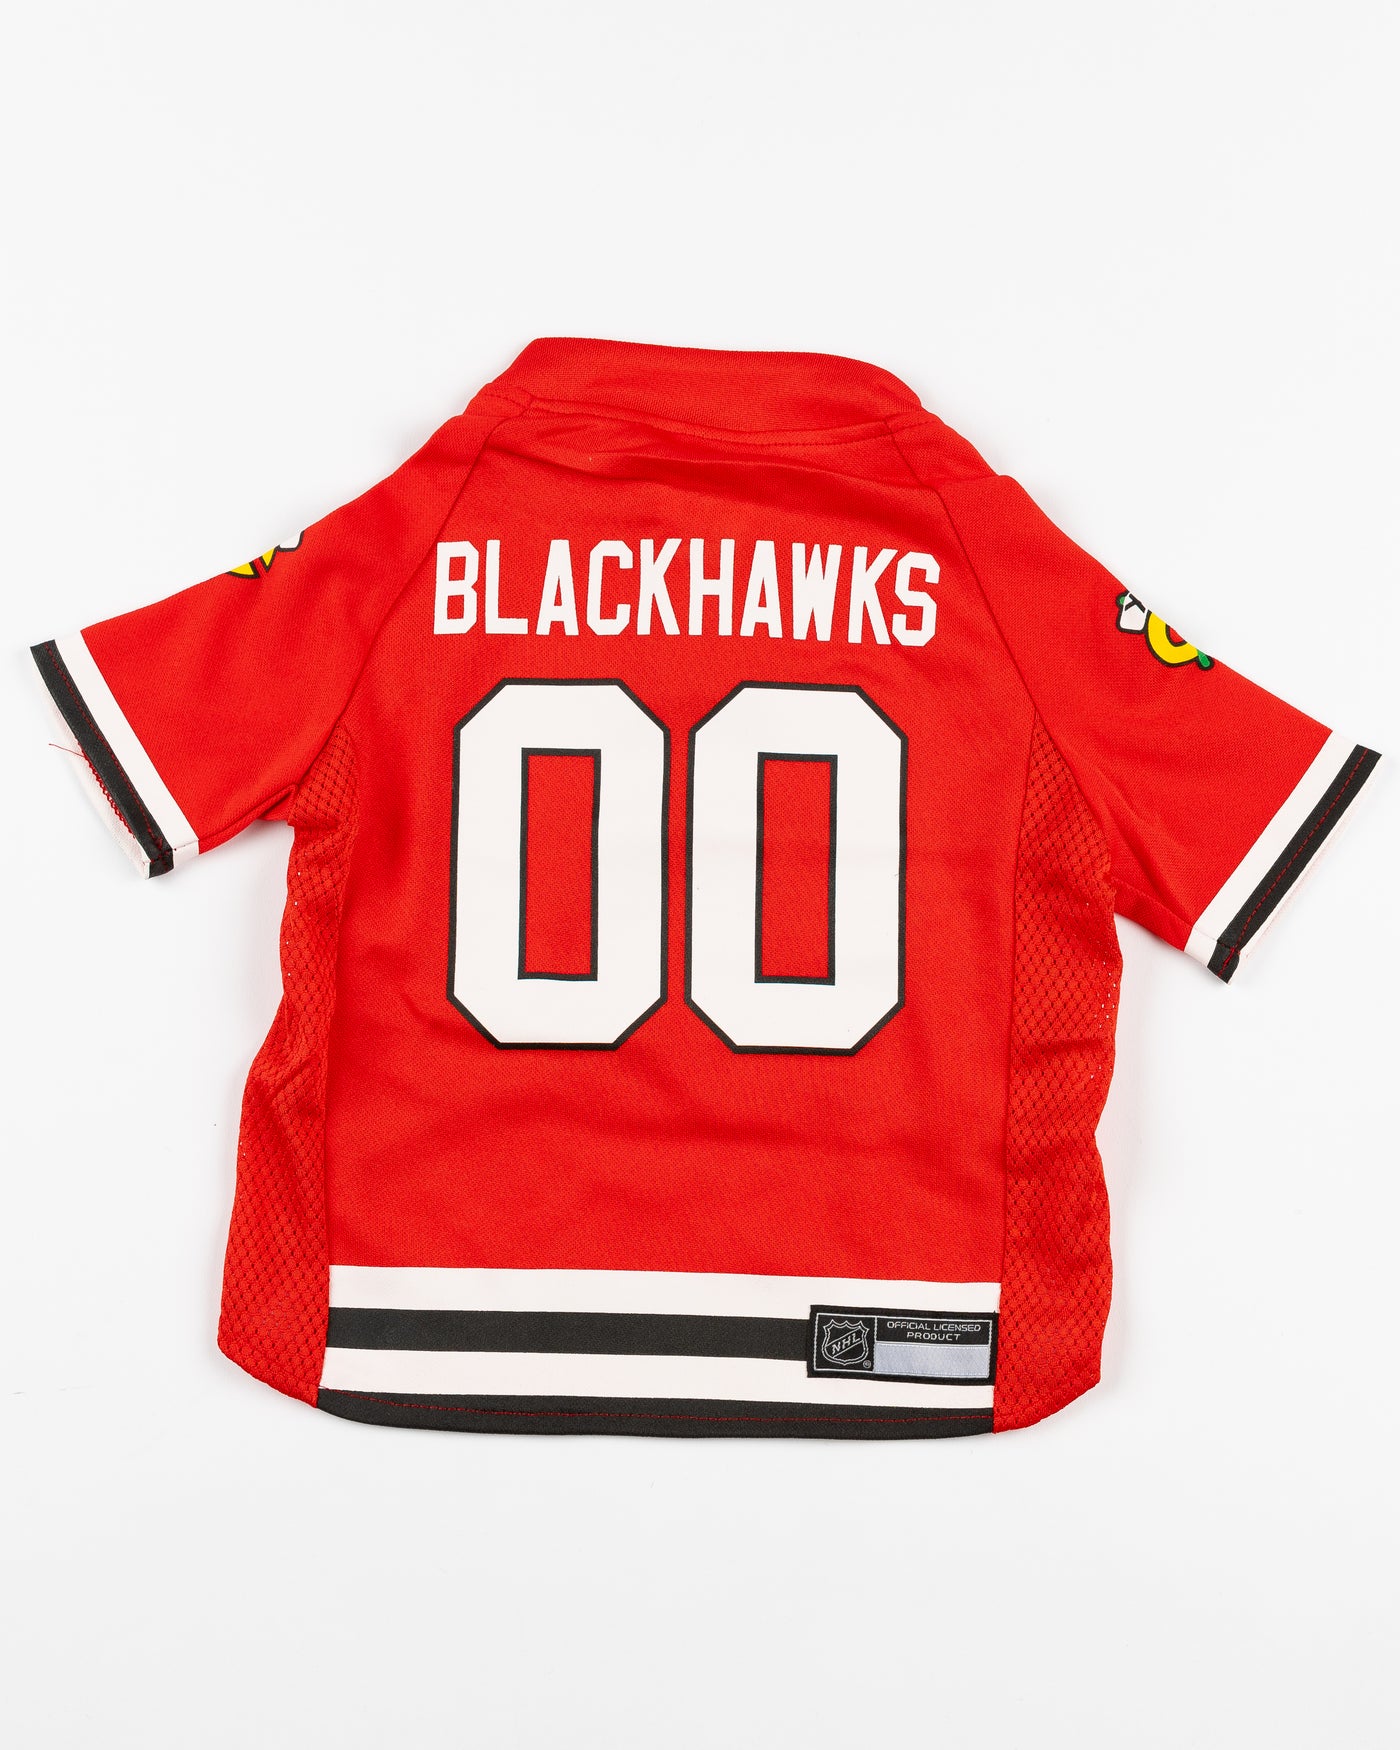 red Chicago Blackhawks pet jersey - back lay flat